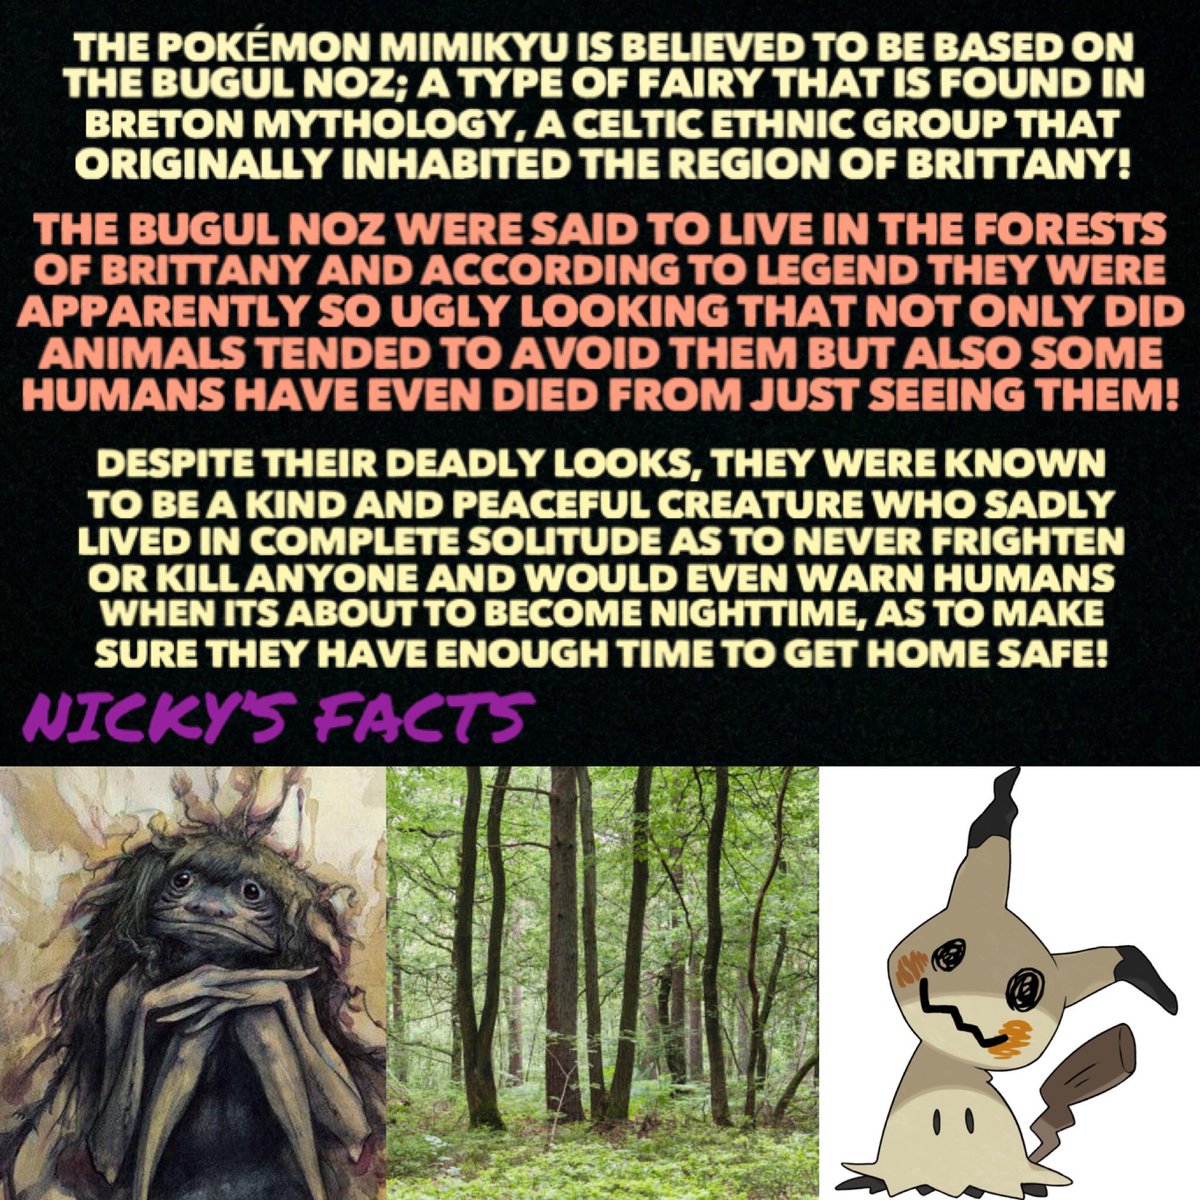 Poor Bugul Noz, they live forever alone in sadness just to keep us safe.😭 #Pokemon #Mimikyu #Mythology #Celtic